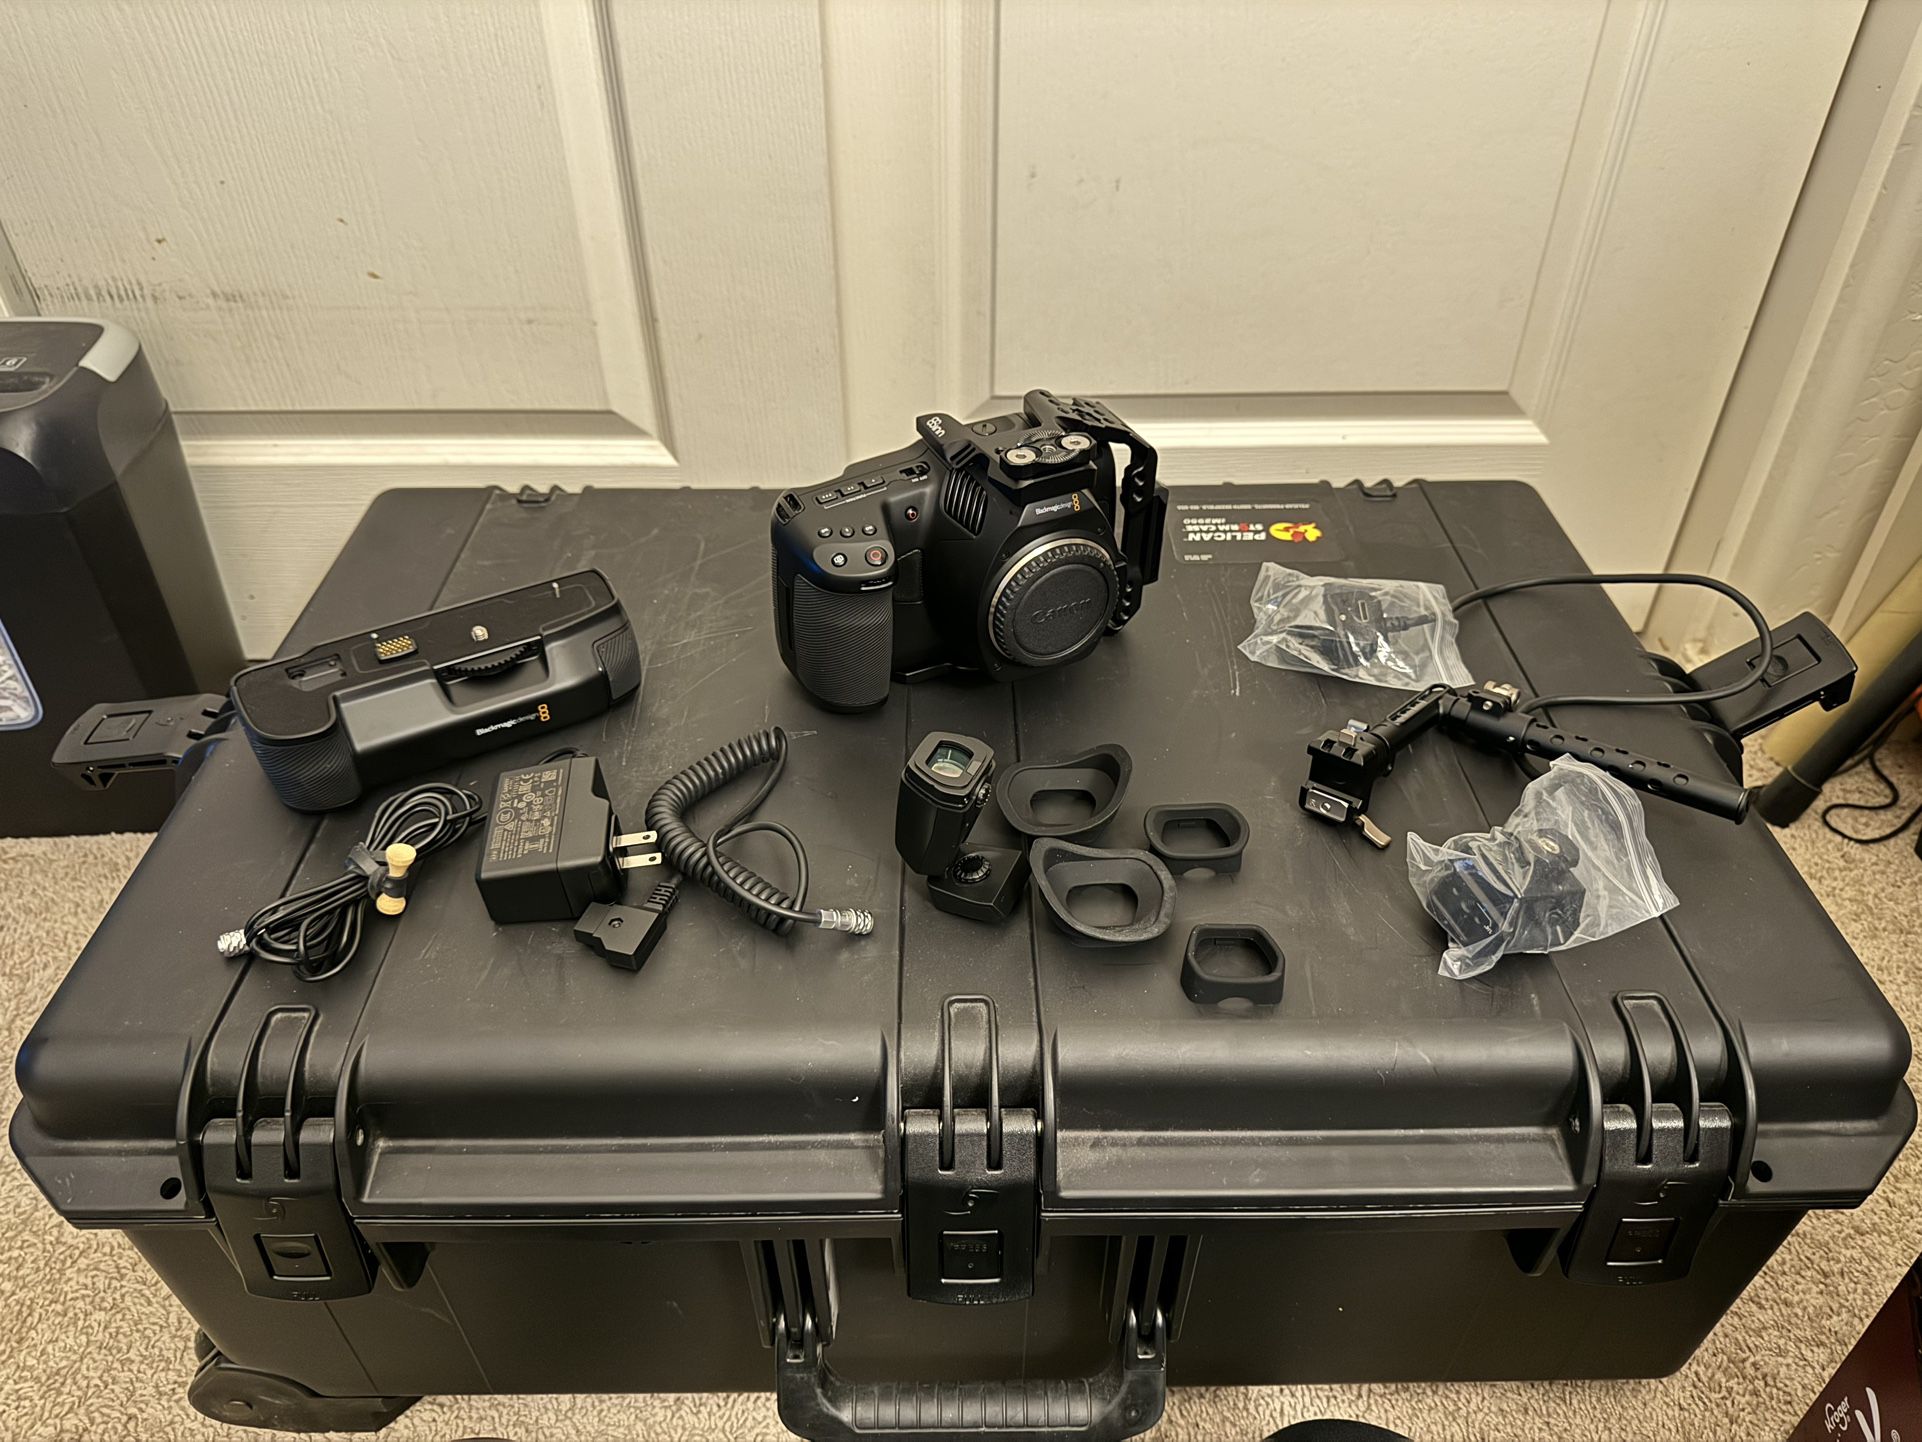 BlackMagic 6K Pro Camera Bundle (Working but Damaged)